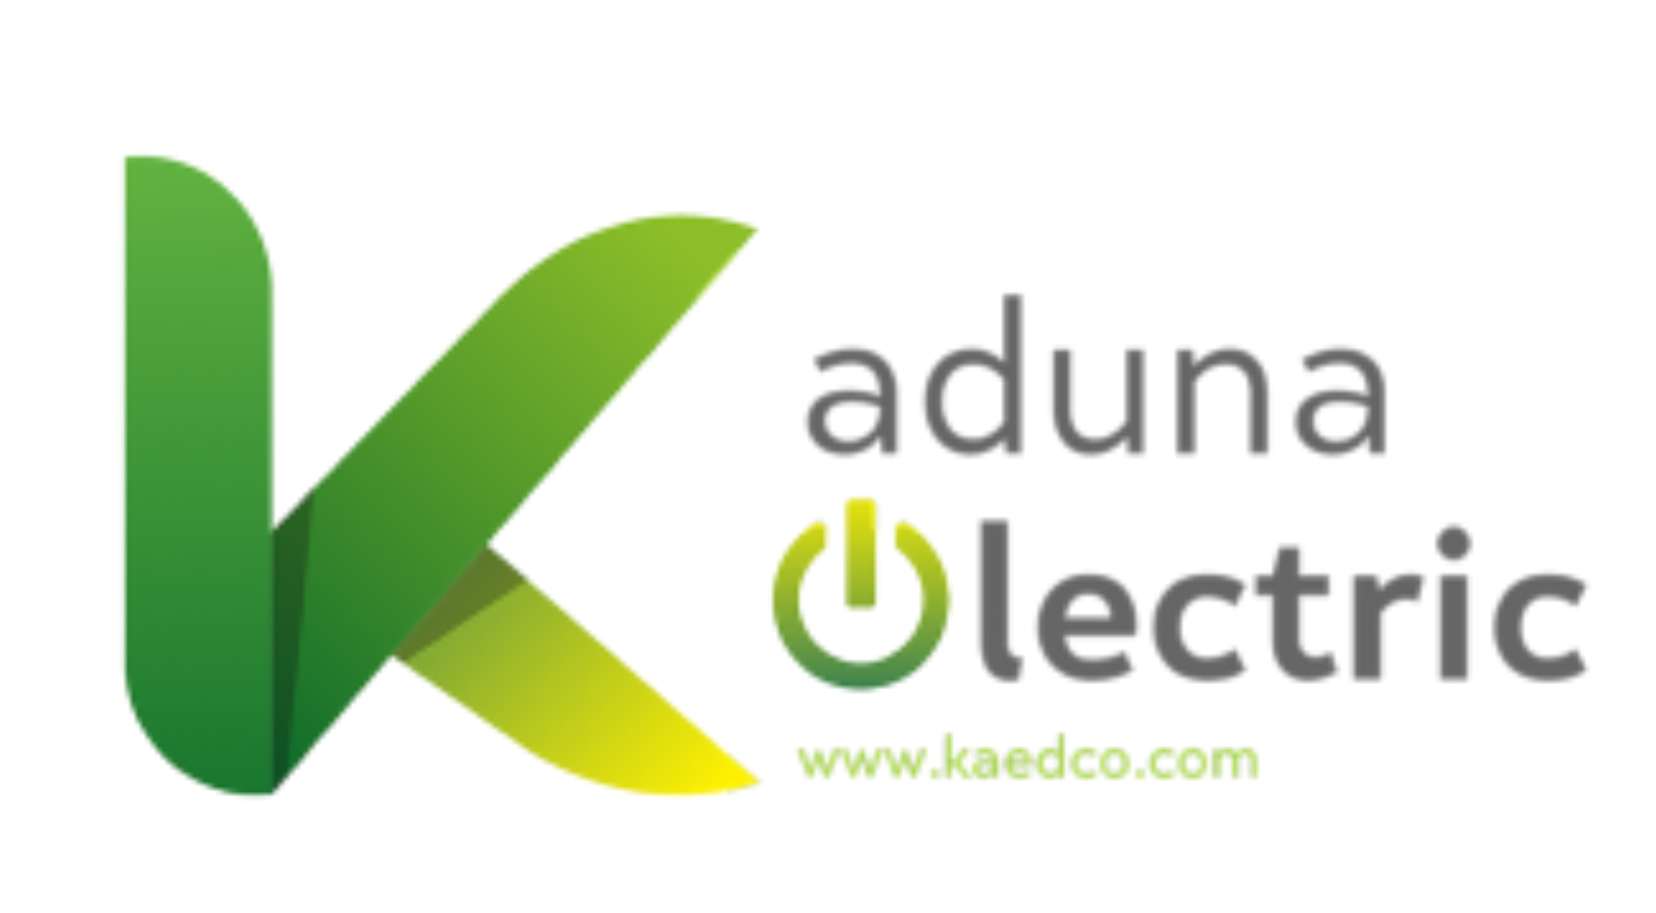 Kaduna Electric Meters